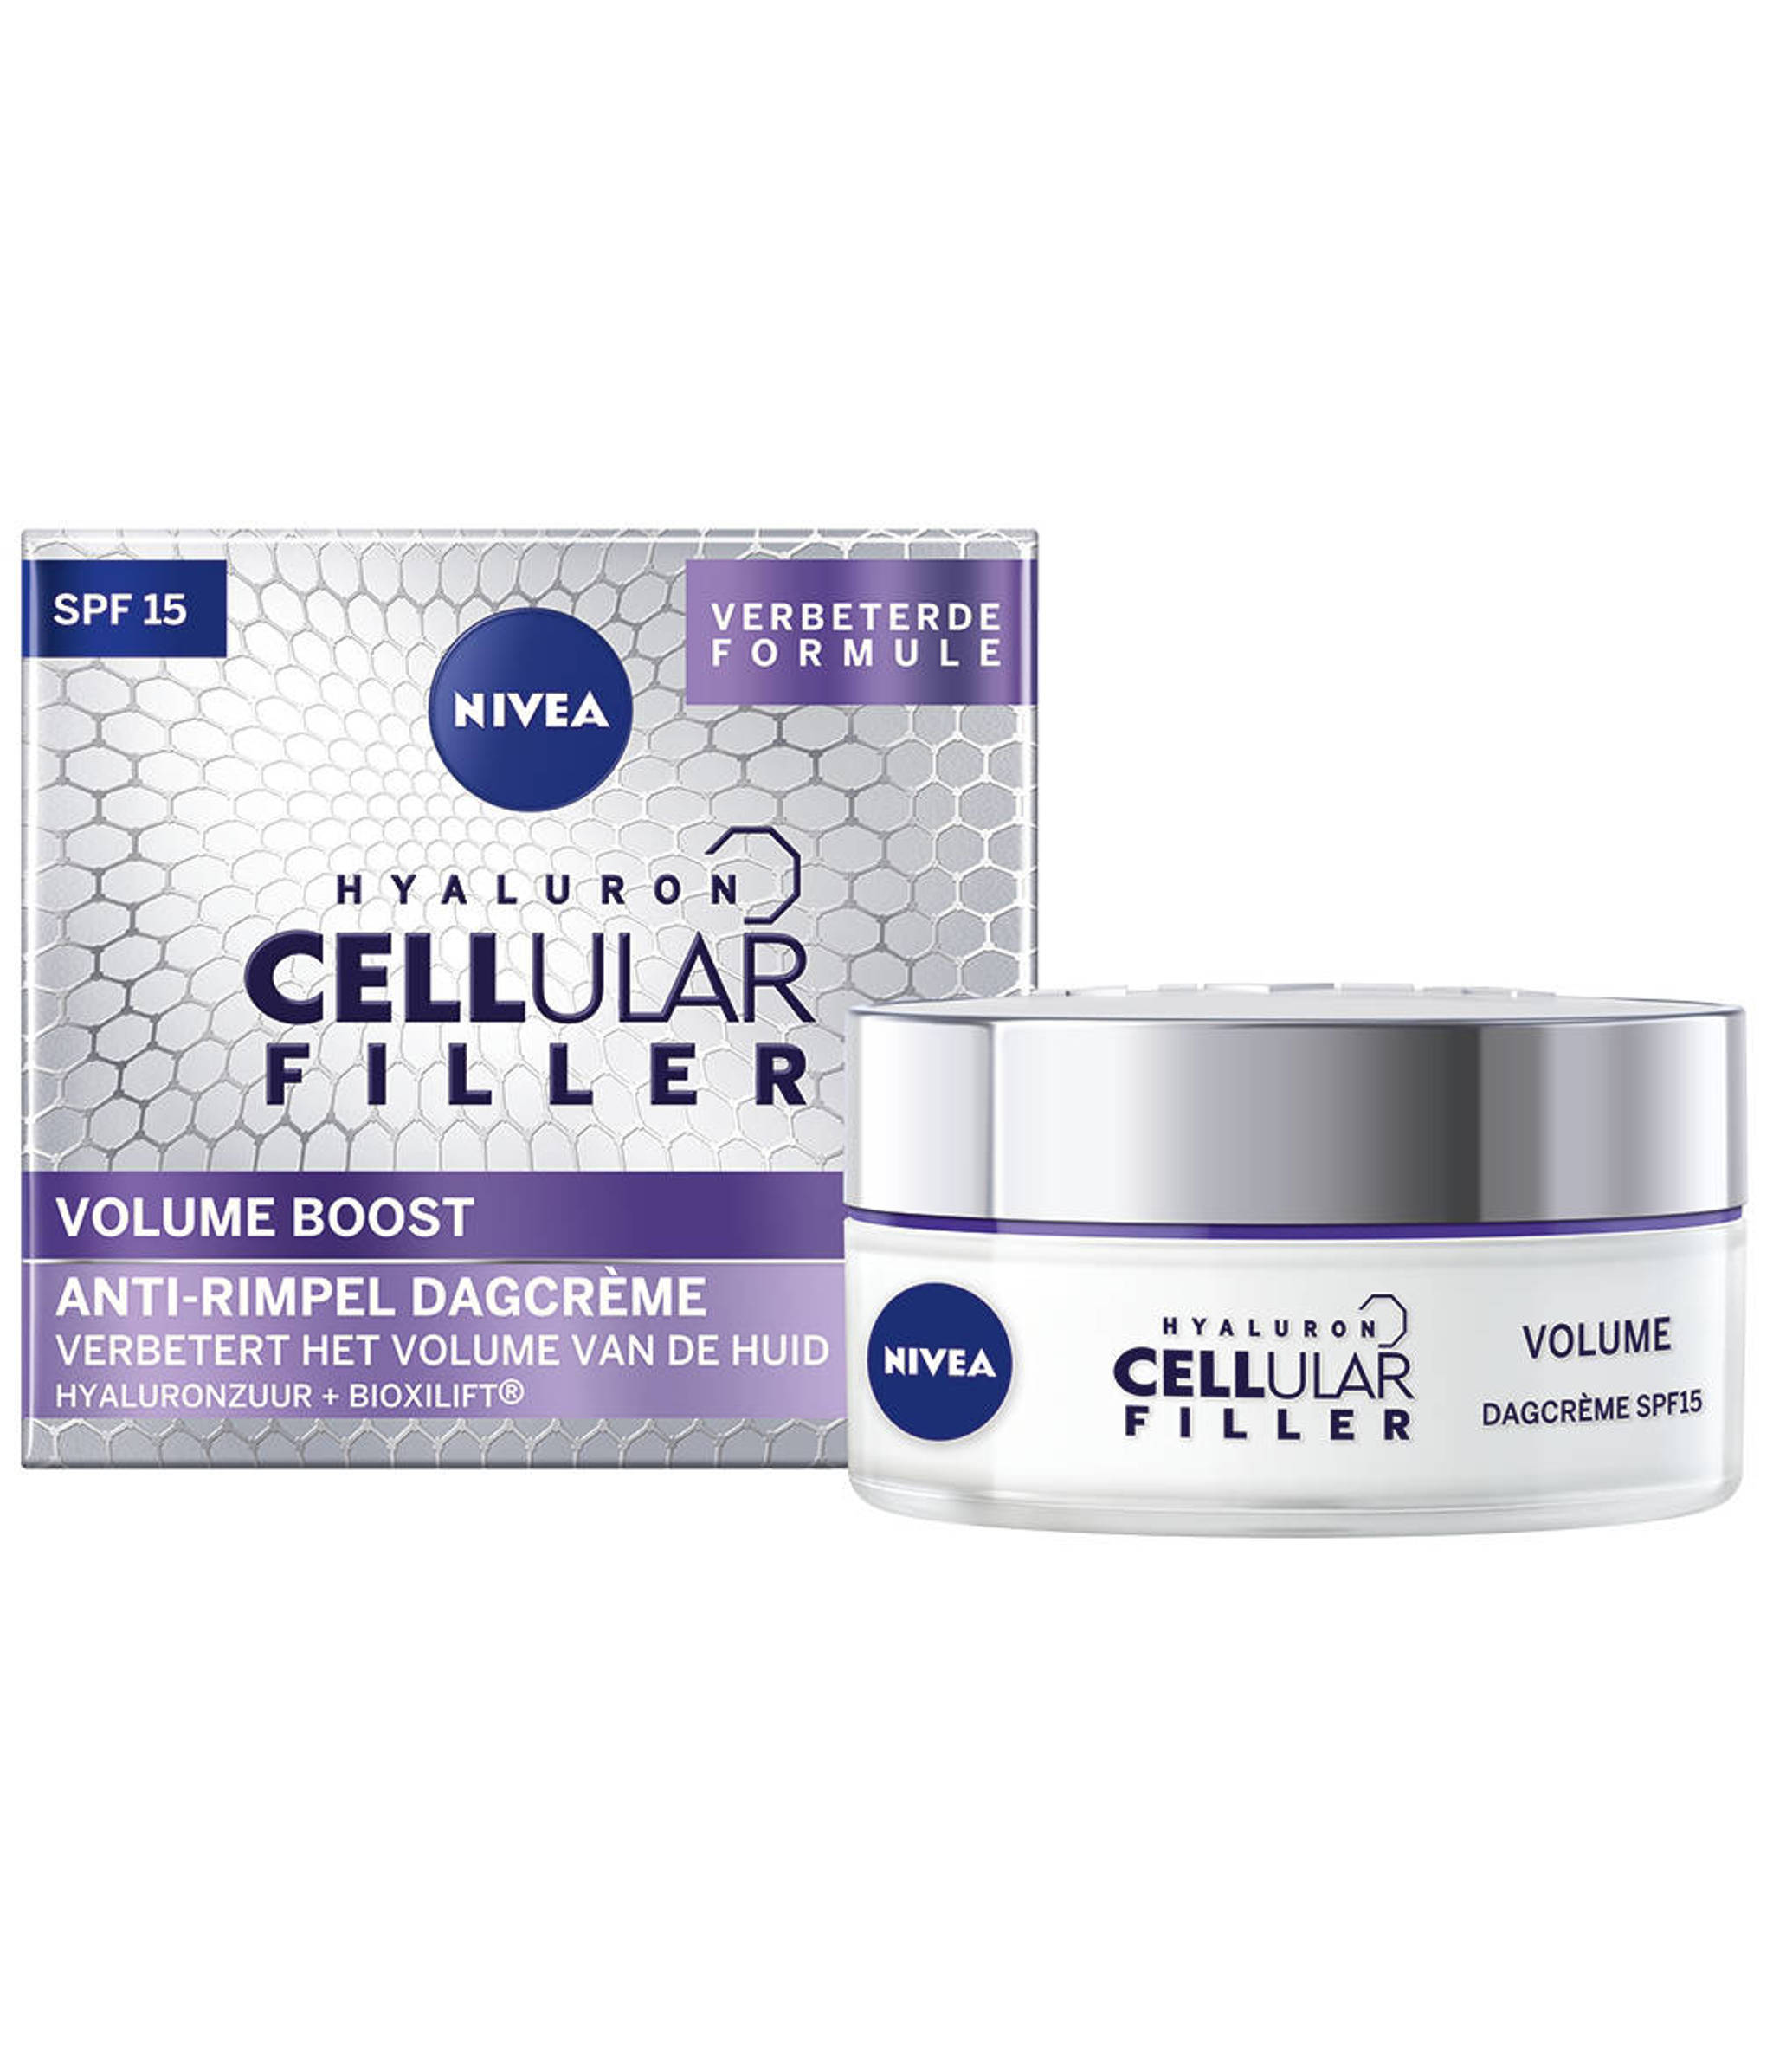 NIVEA Cellular hyaluron filler +volume & dagcreme - 50 ml |